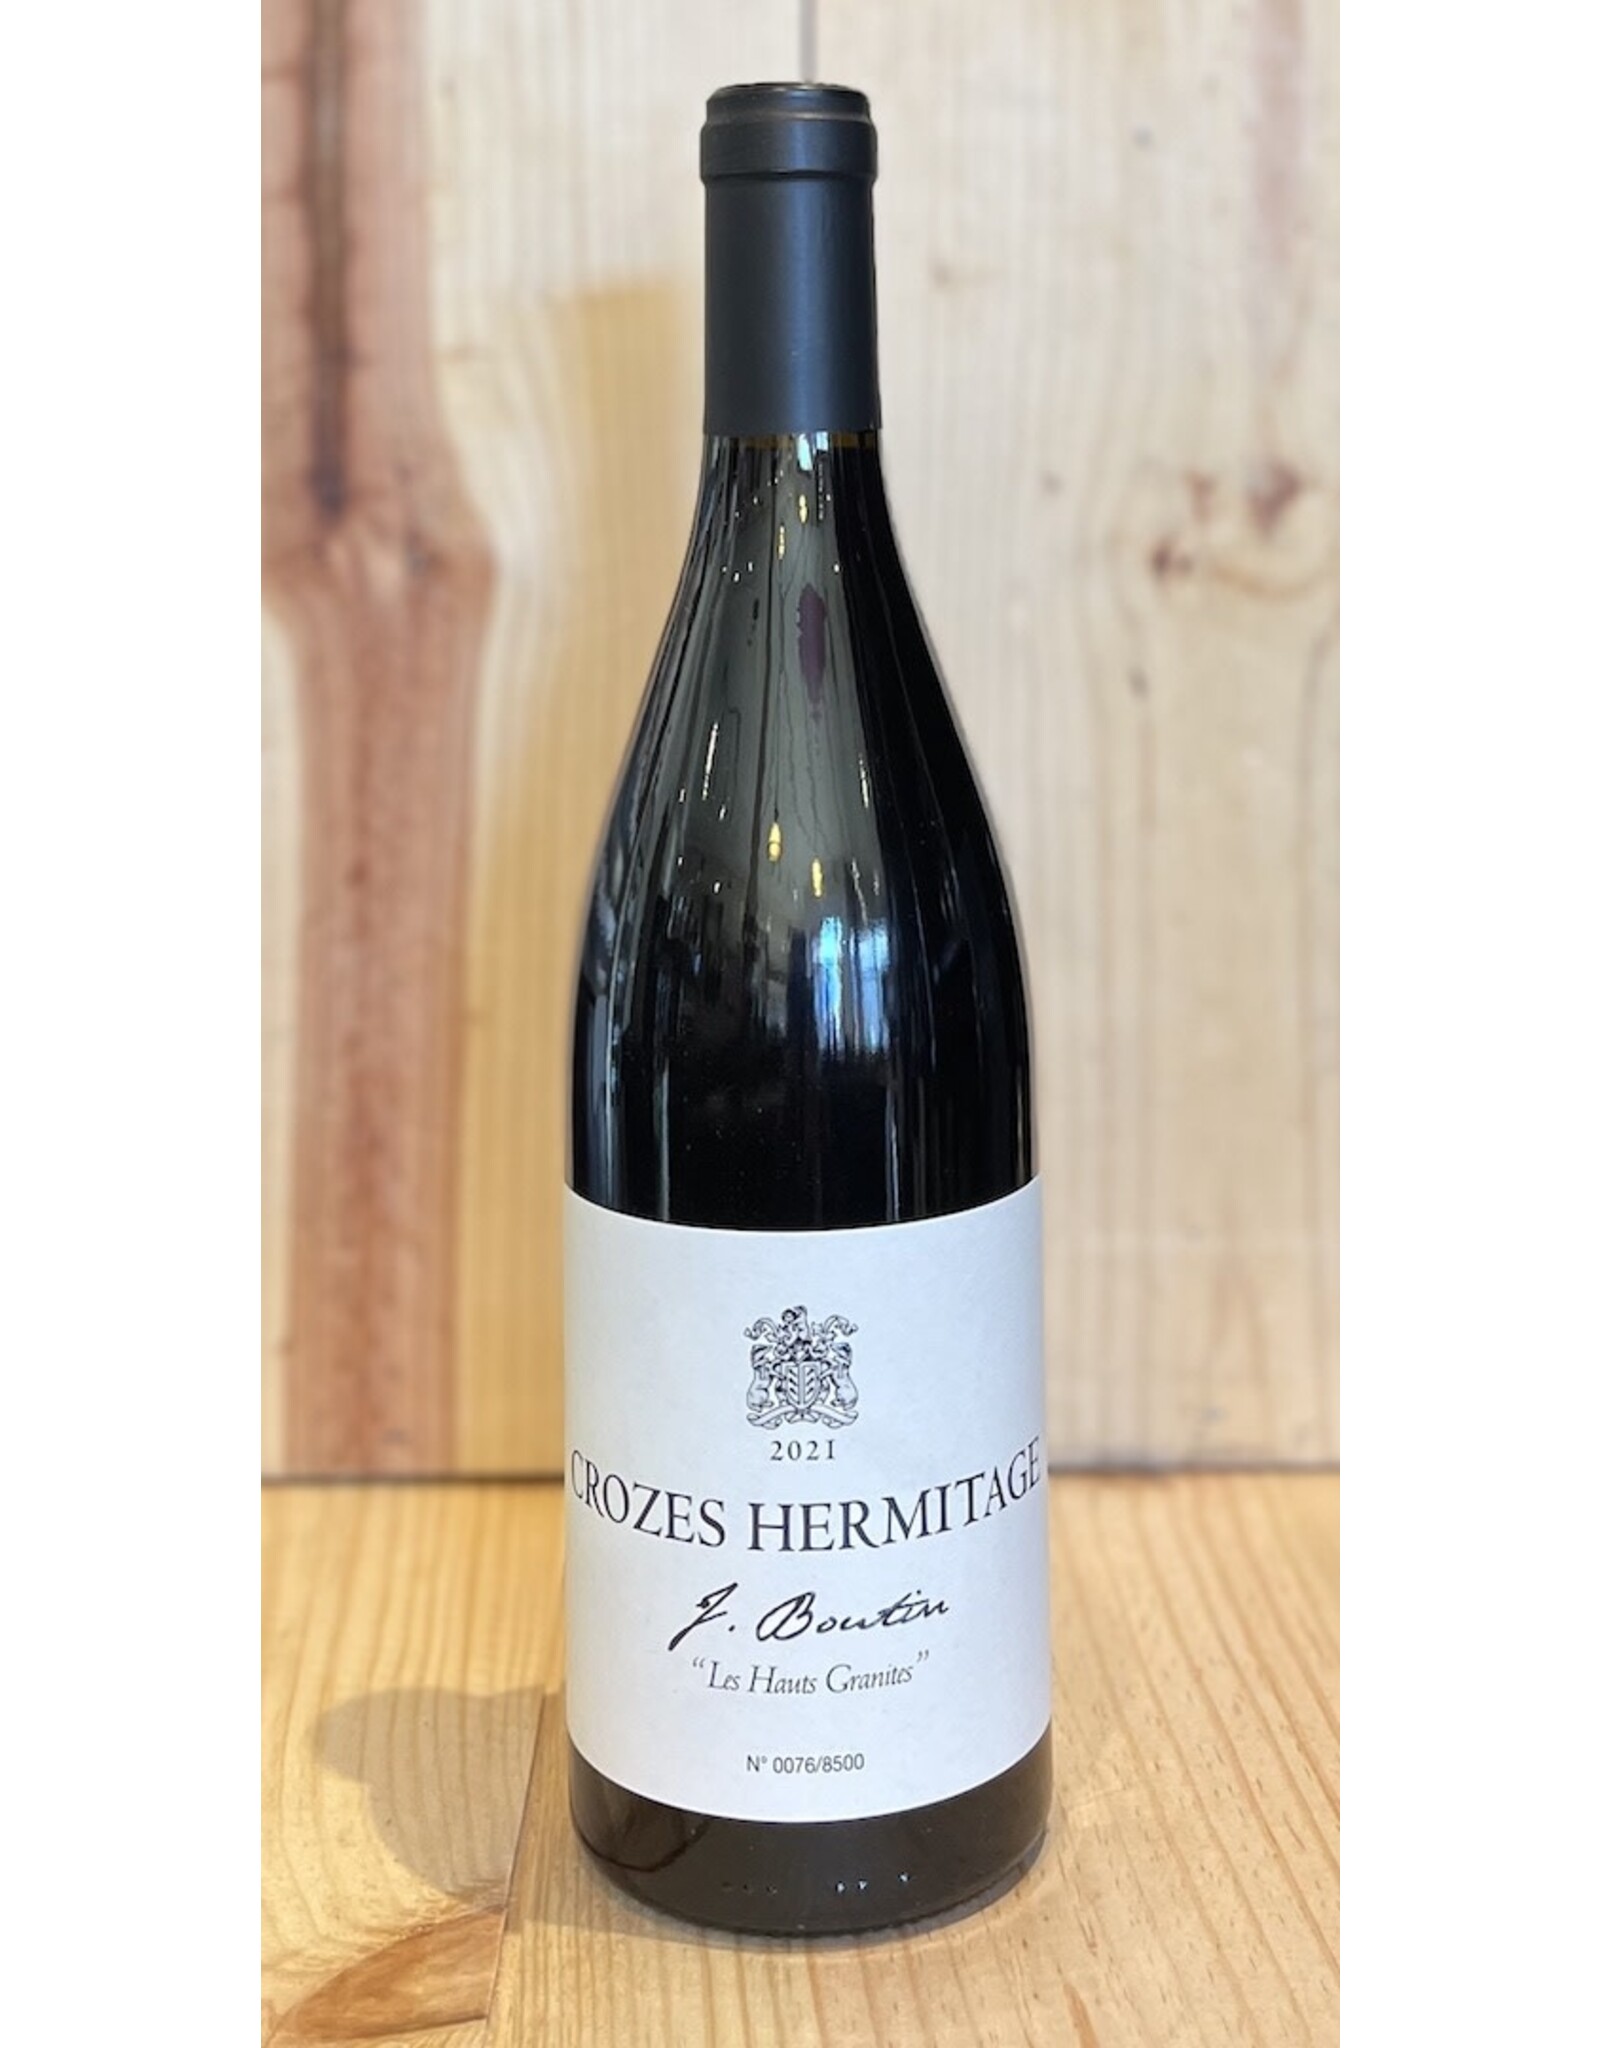 Wine J. Boutin Crozes Hermitage